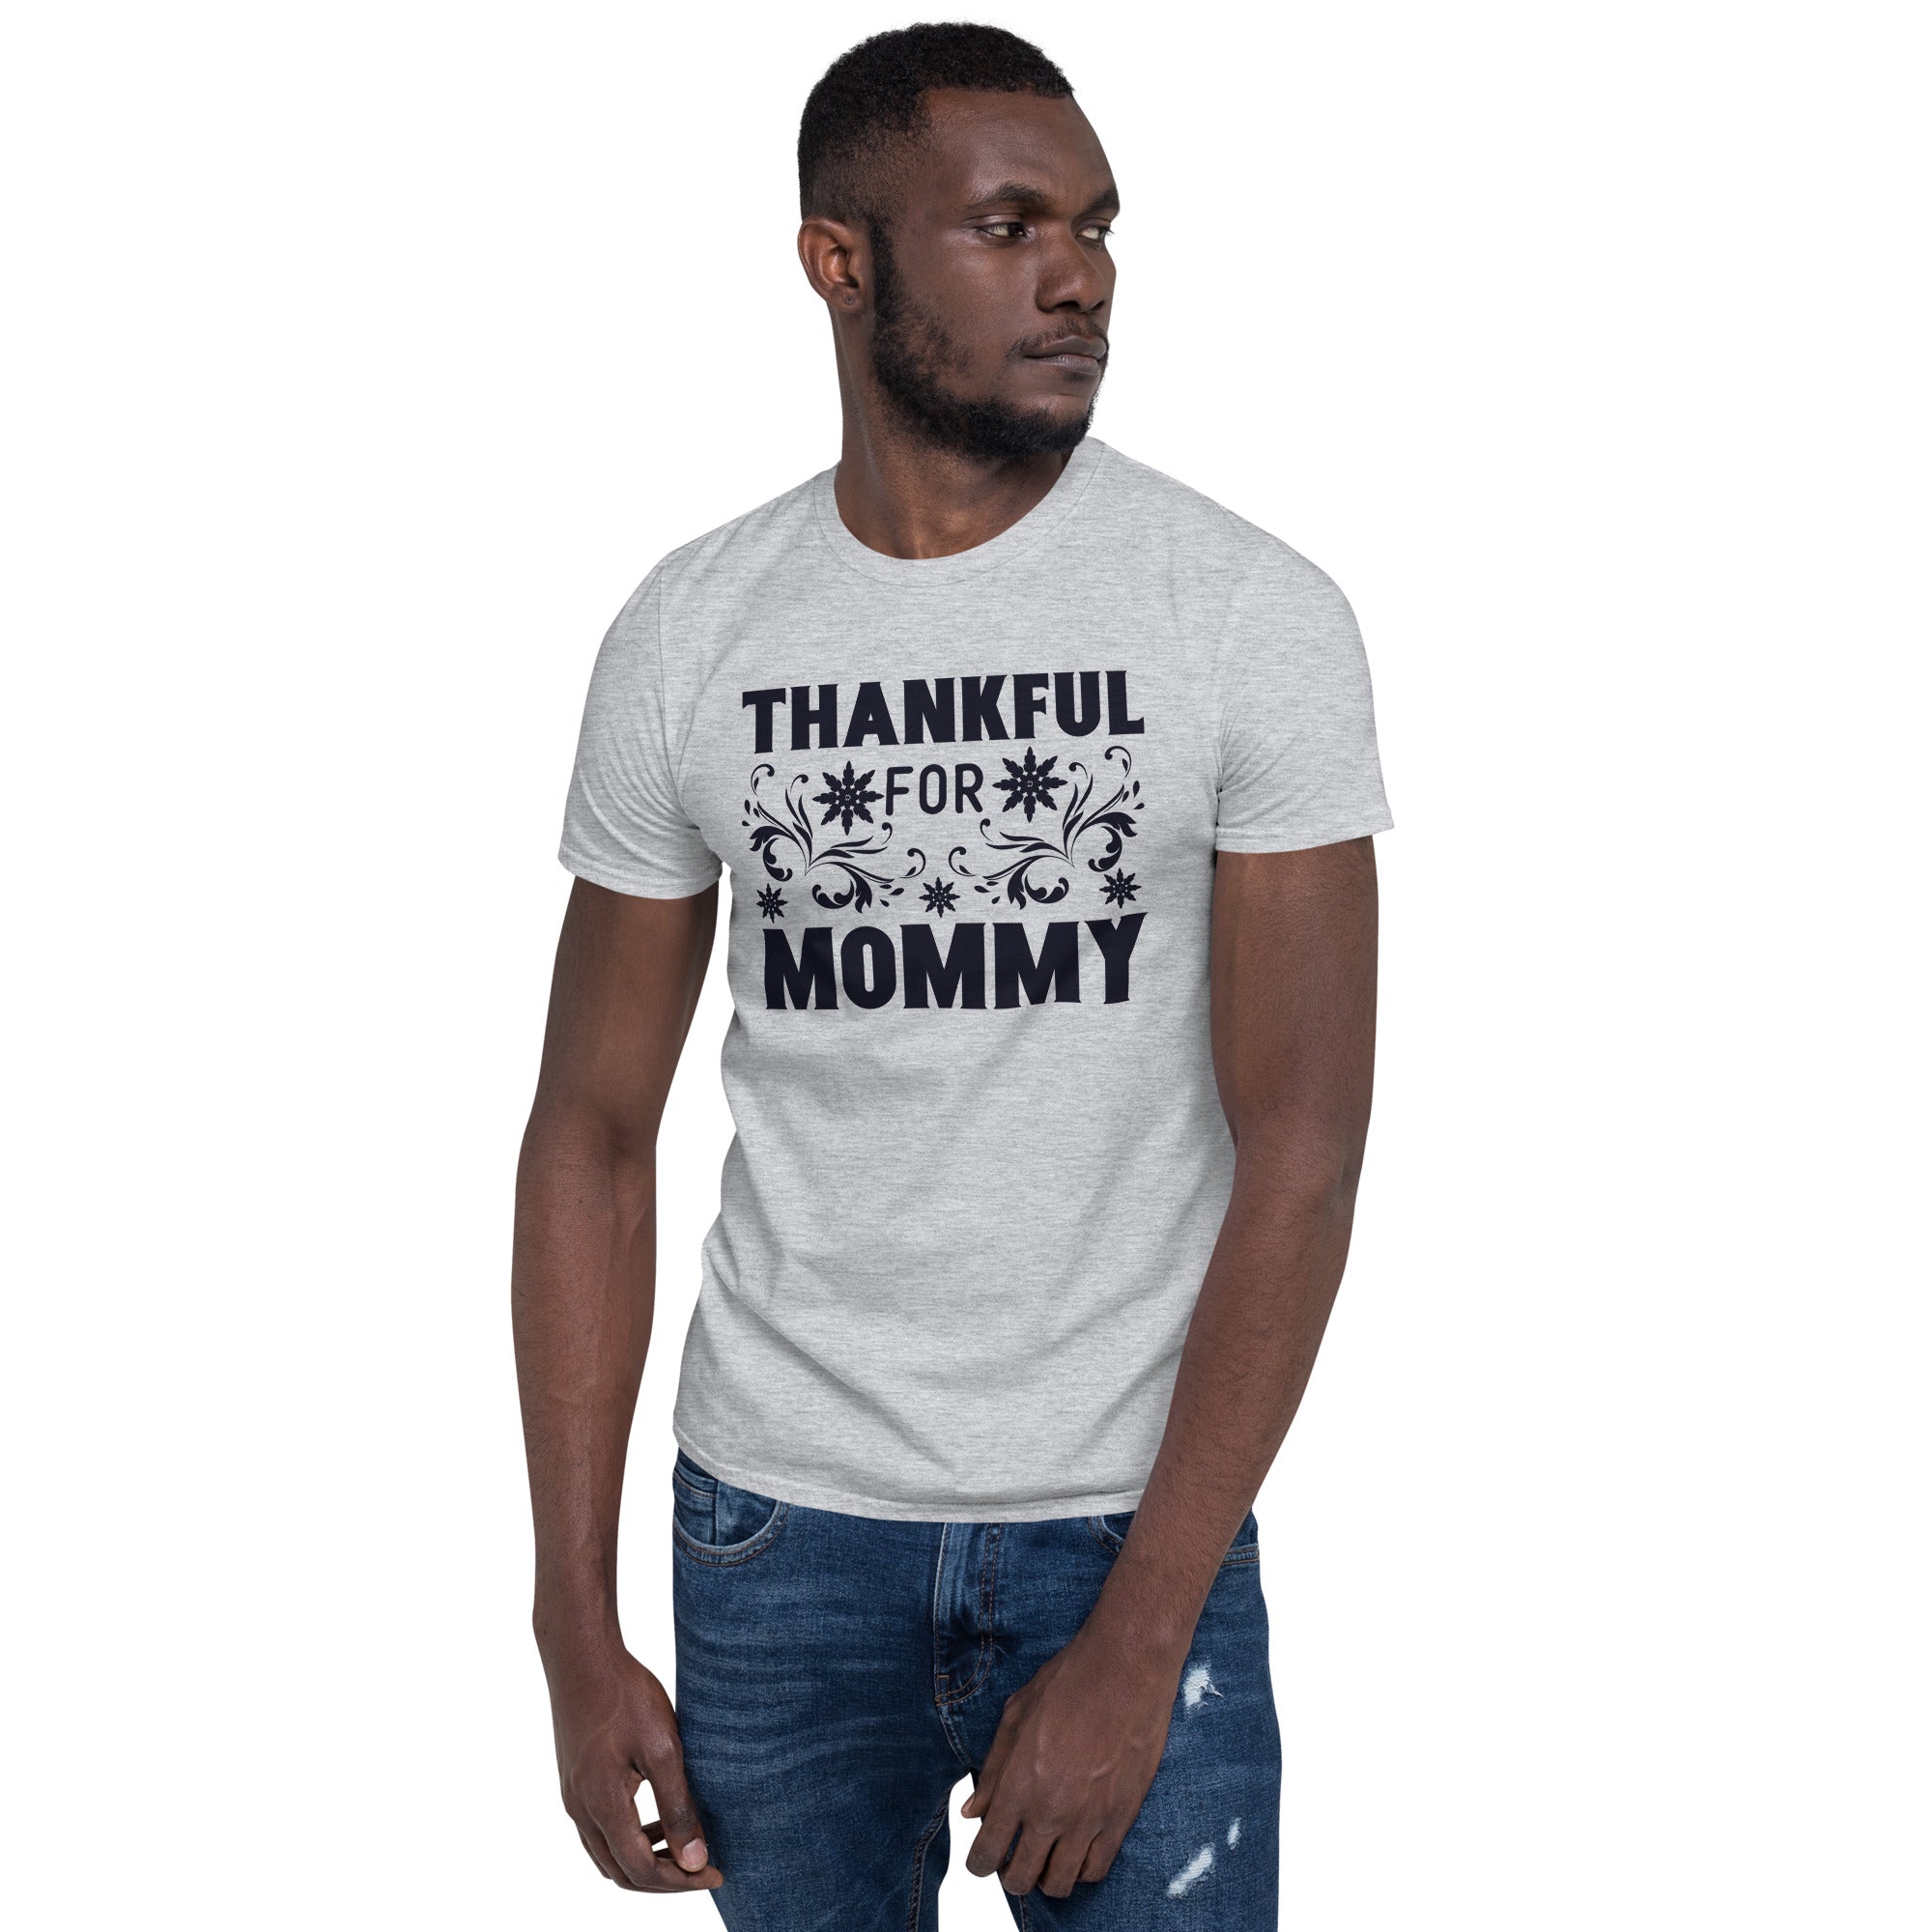 Thankful For Mommy - Short-Sleeve Unisex T-Shirt